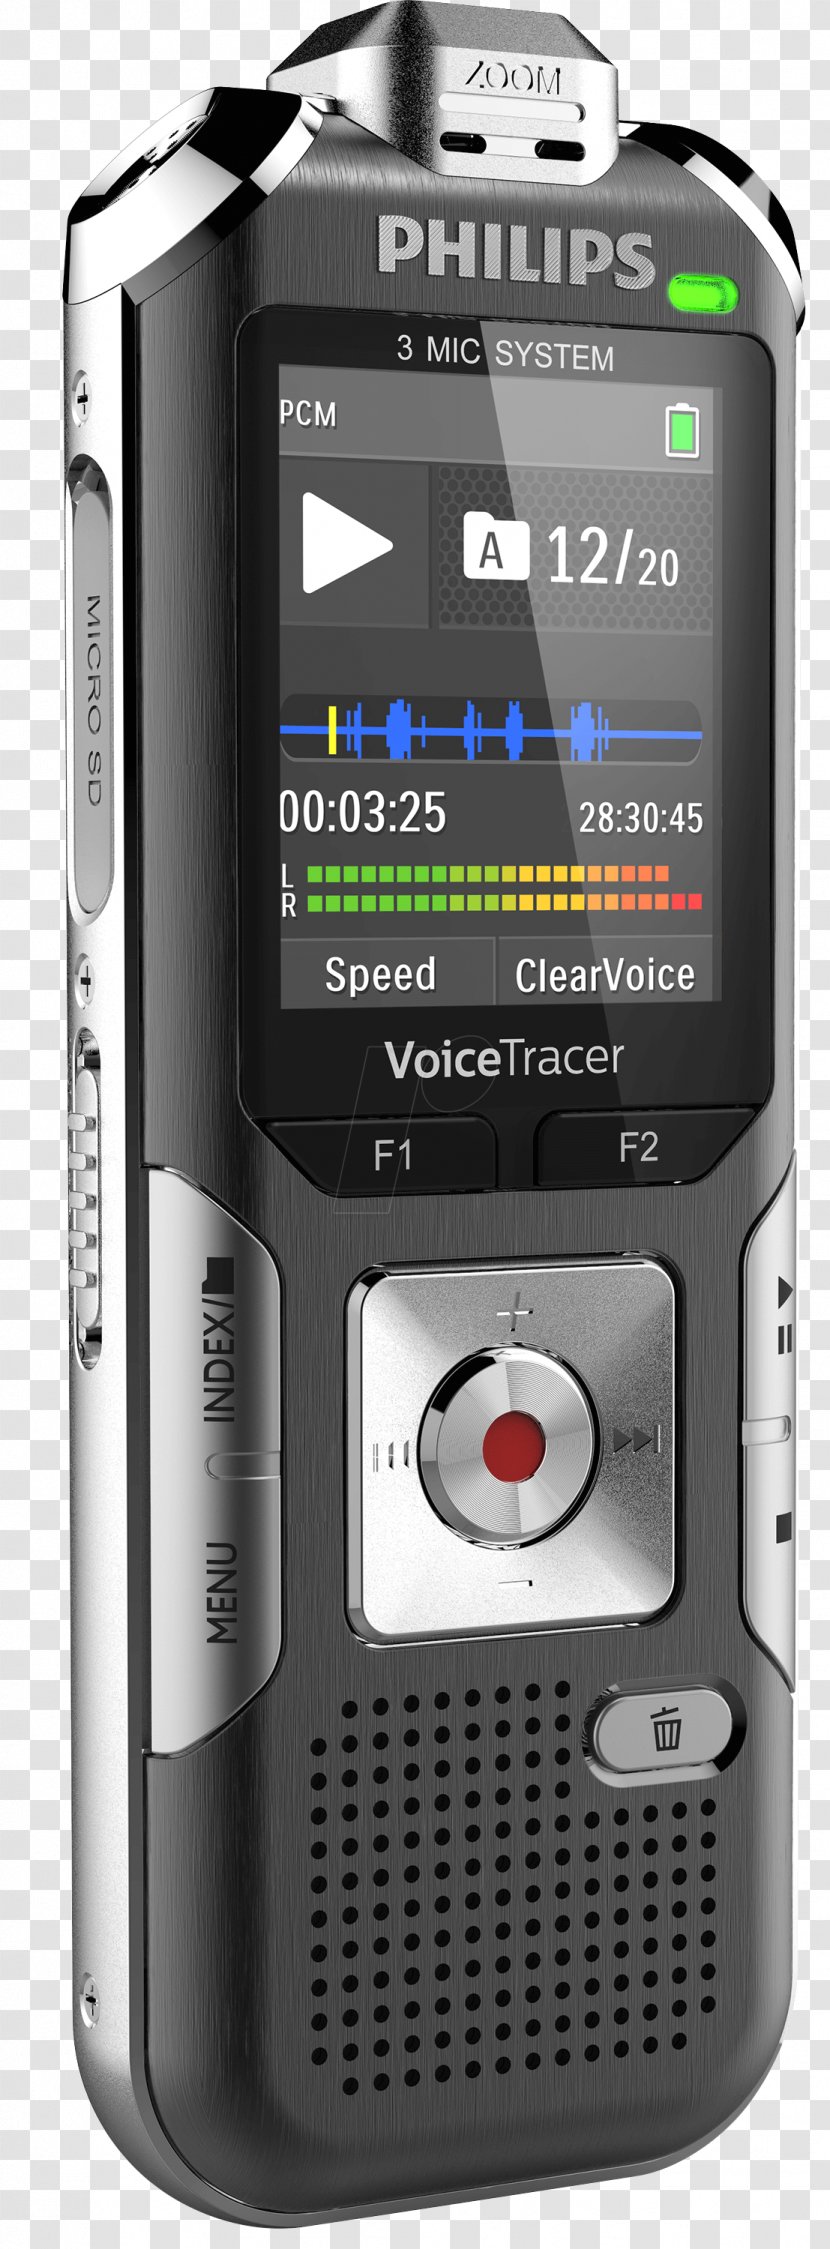 Microphone Digital Audio Dictation Machine Philips Sound - Silhouette Transparent PNG